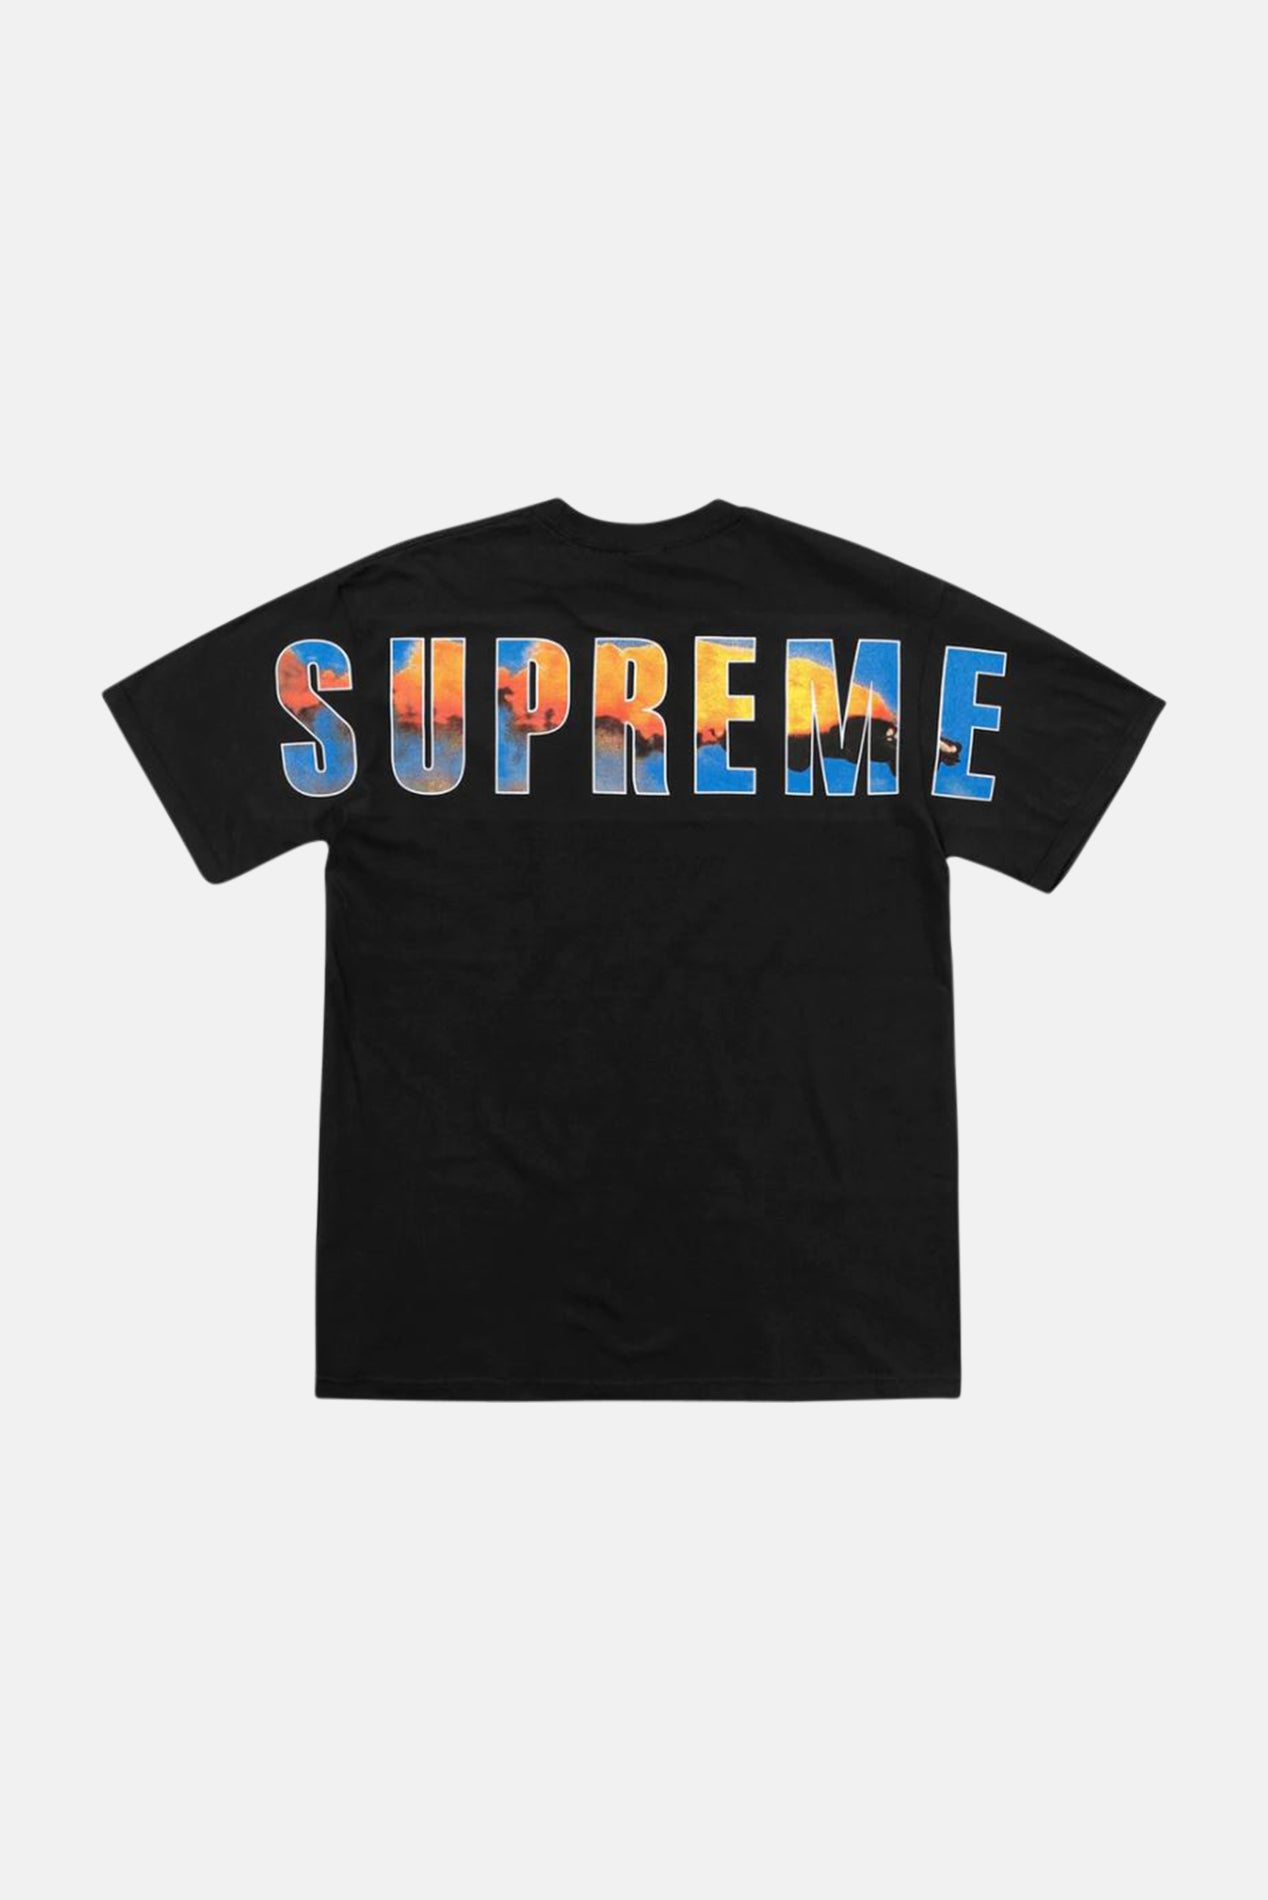 Supreme Back Logo T-Shirt in Black, Size Medium - T-shirts